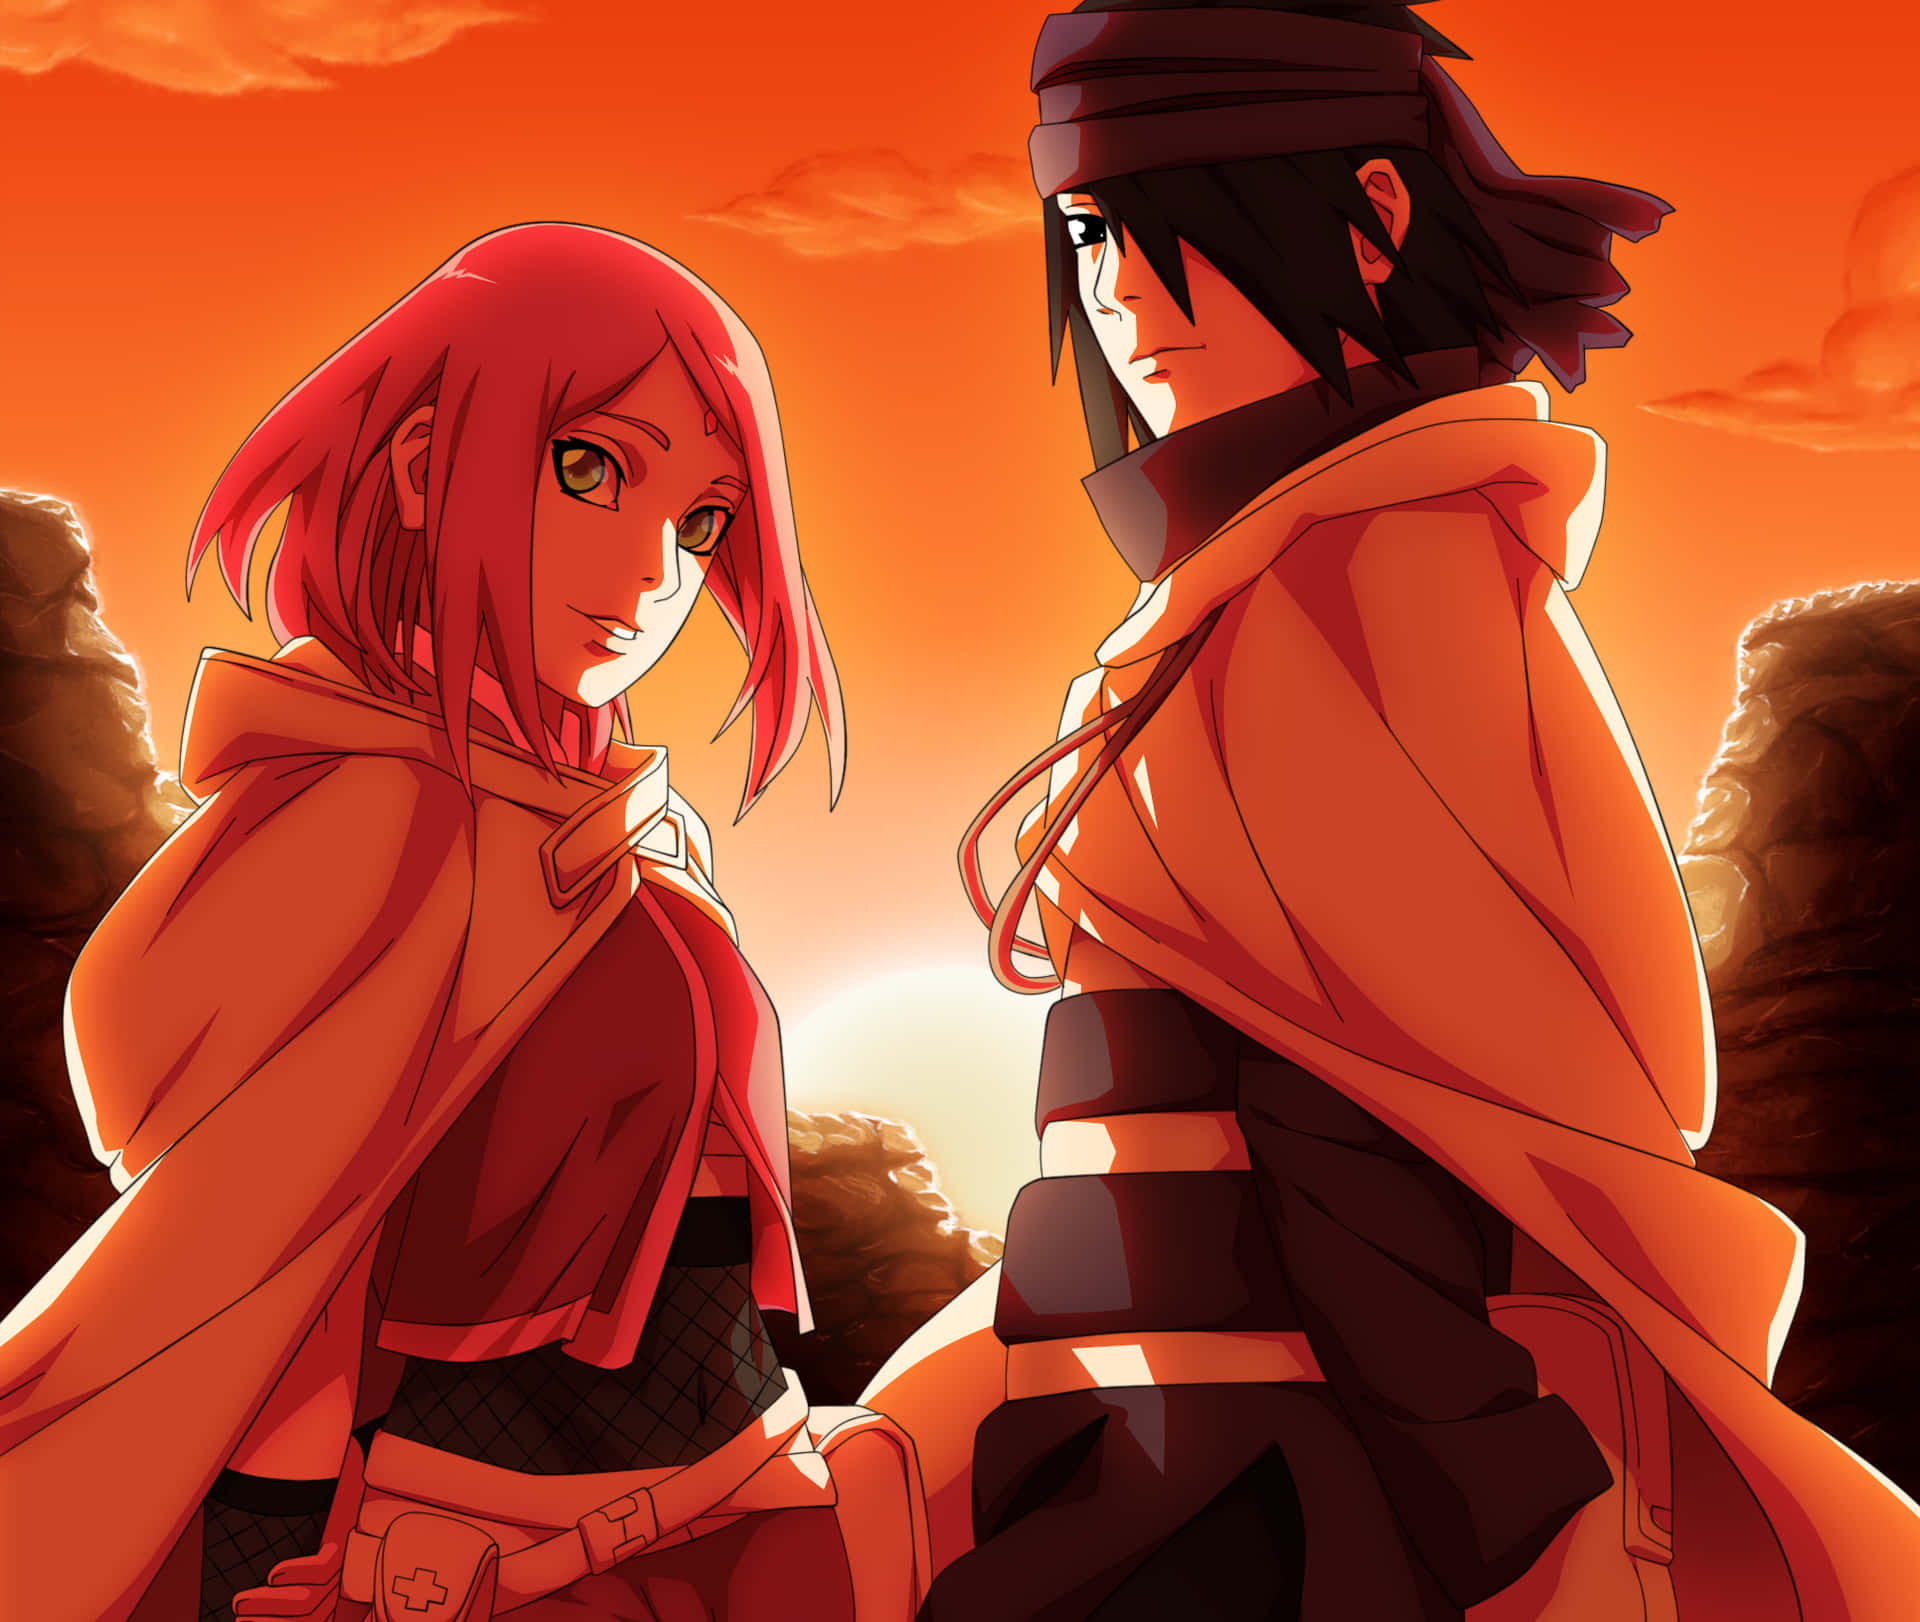 Sasuke Sakura – Two iconic characters from the popular anime series. Wallpaper